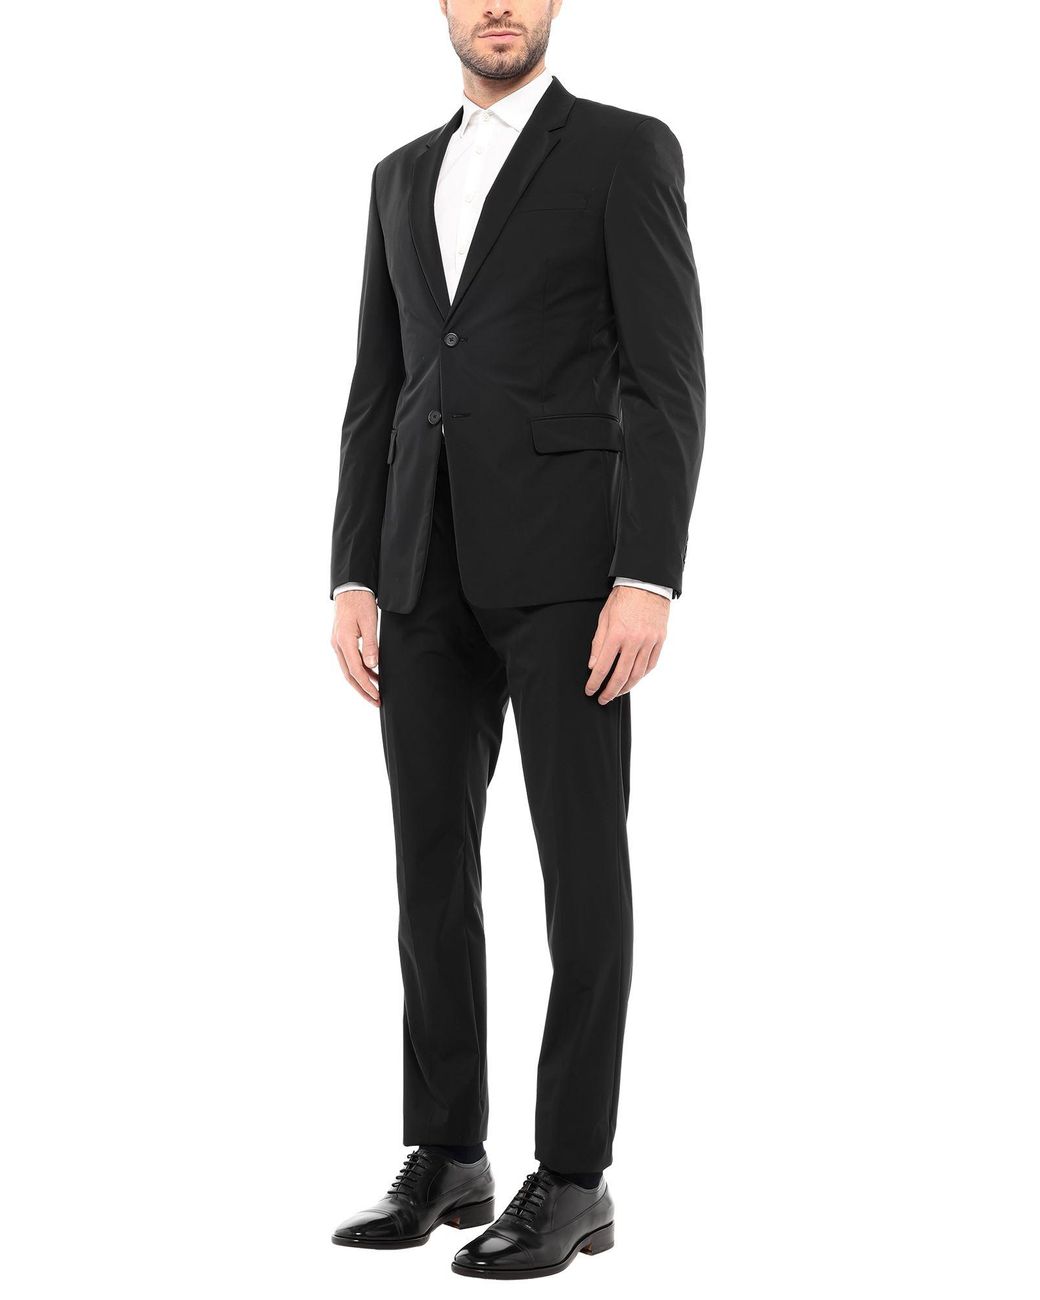 Prada Synthetic Suit in Black for Men - Lyst